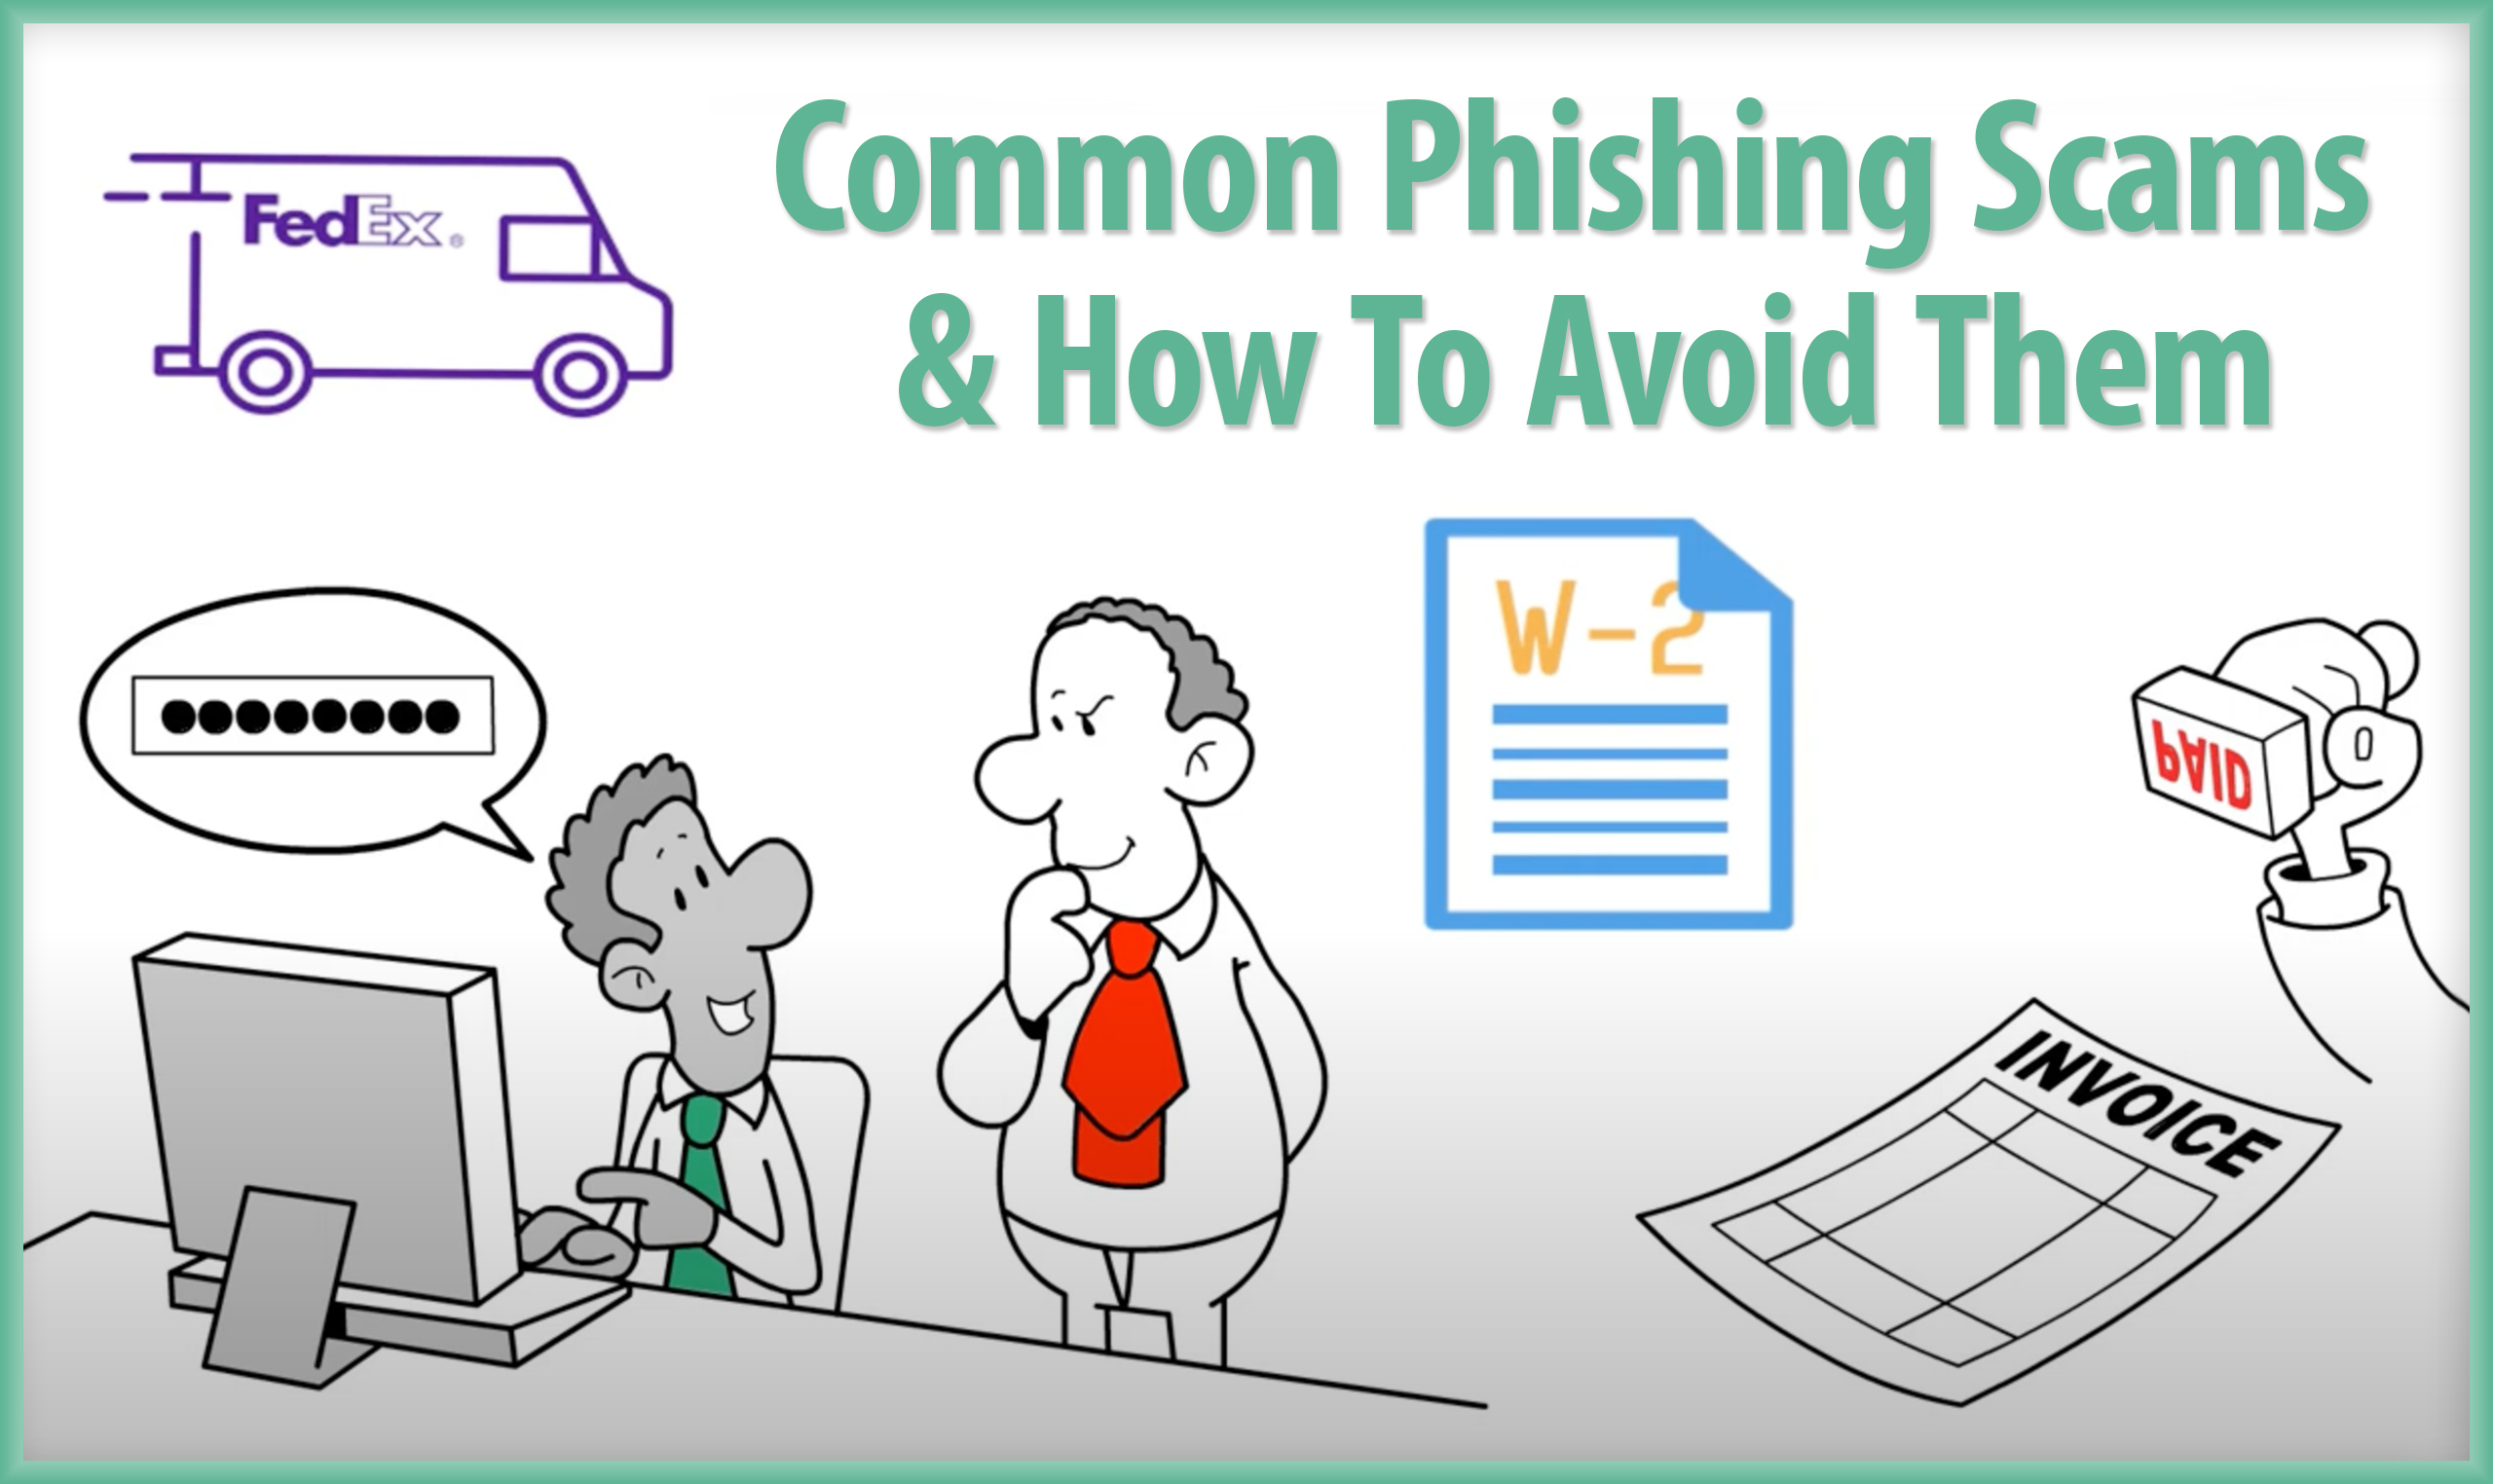 Common Phishing Scams & How To Avoid Them